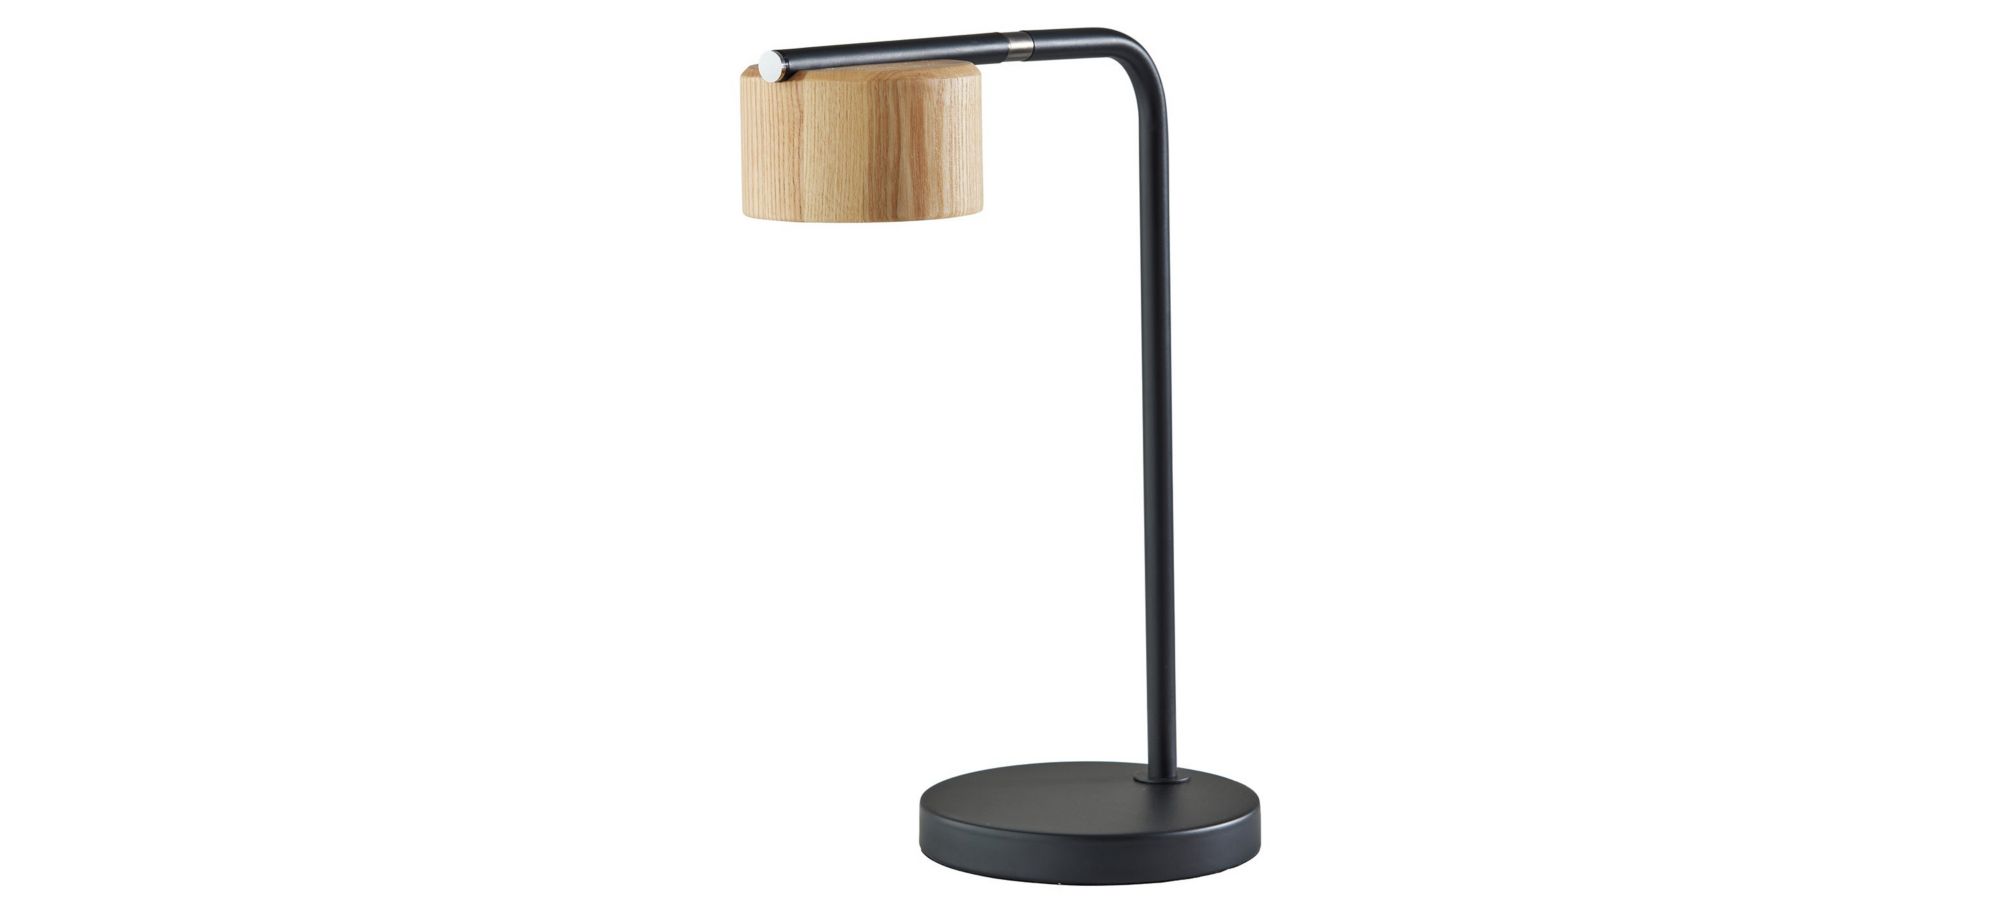 Roman LED Desk Lamp in Black by Adesso Inc